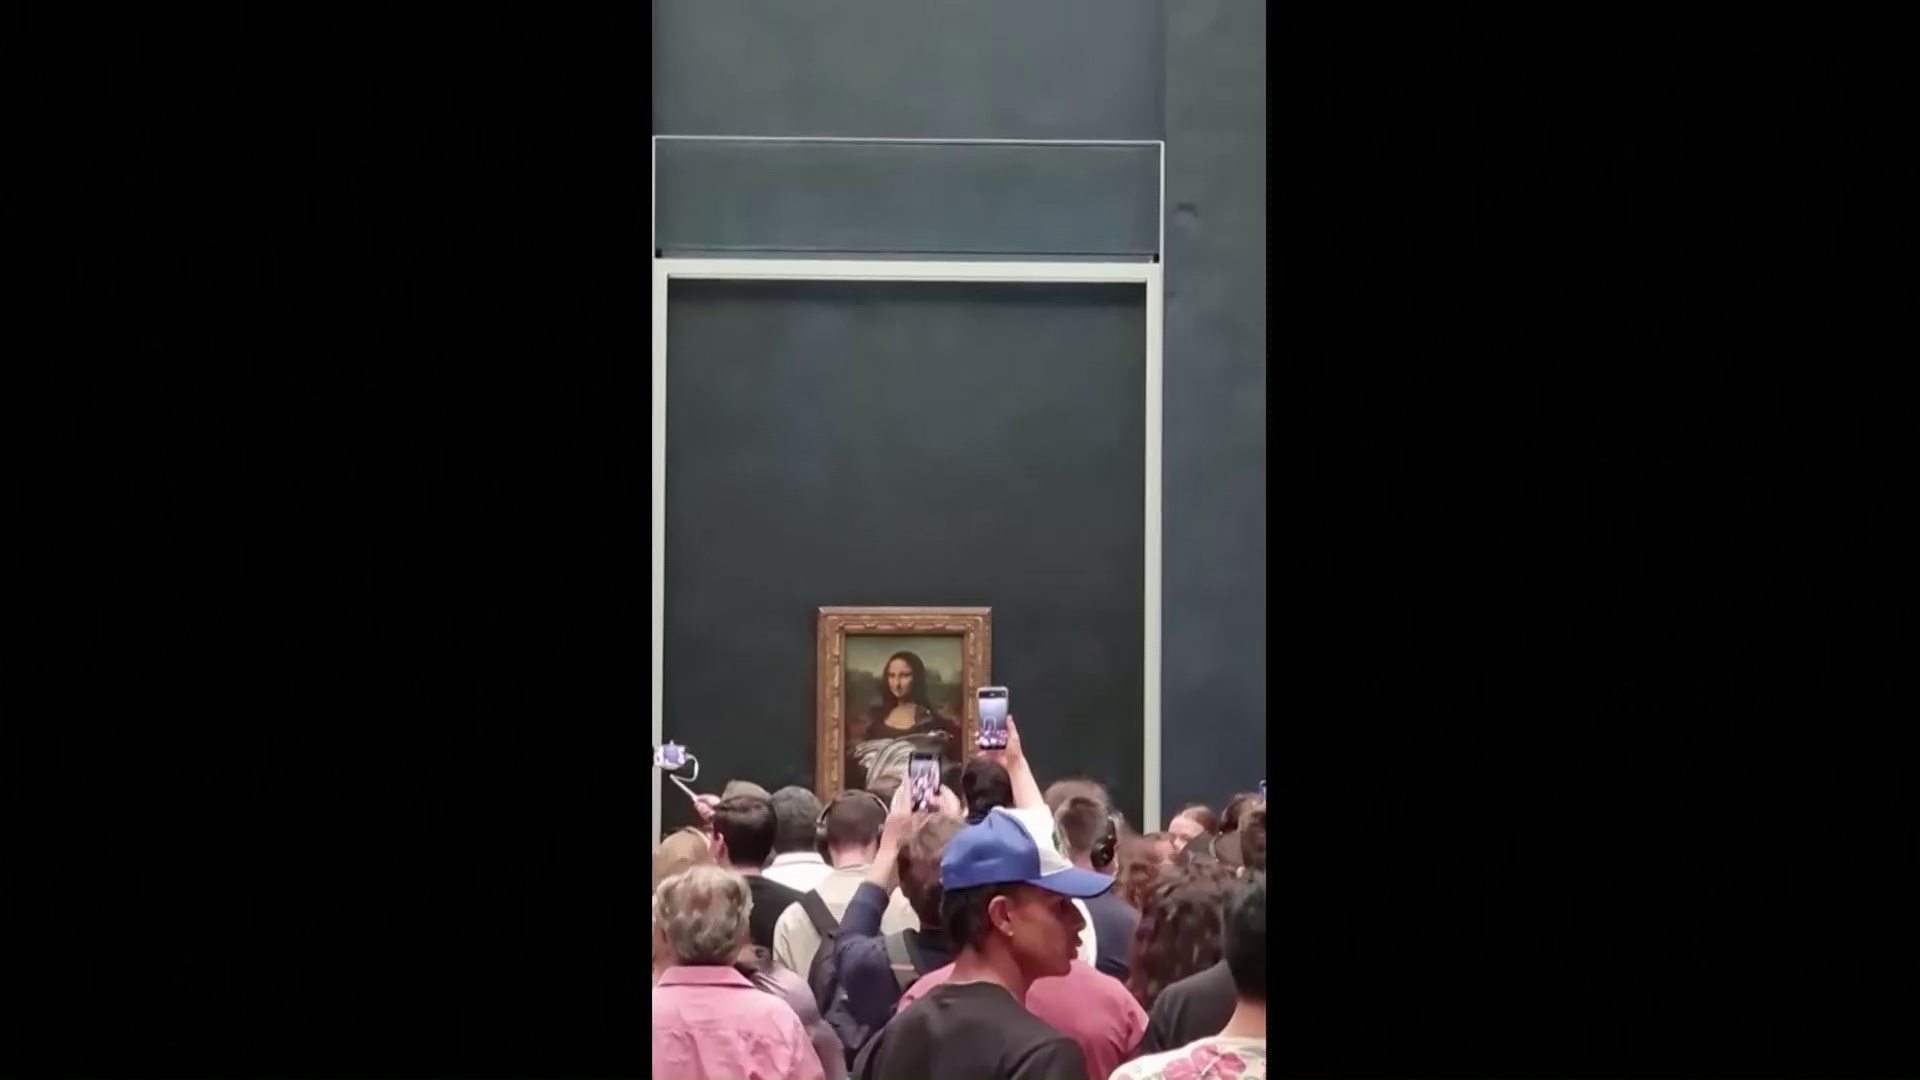 Mona Lisa smeared in cream in climate protest attack